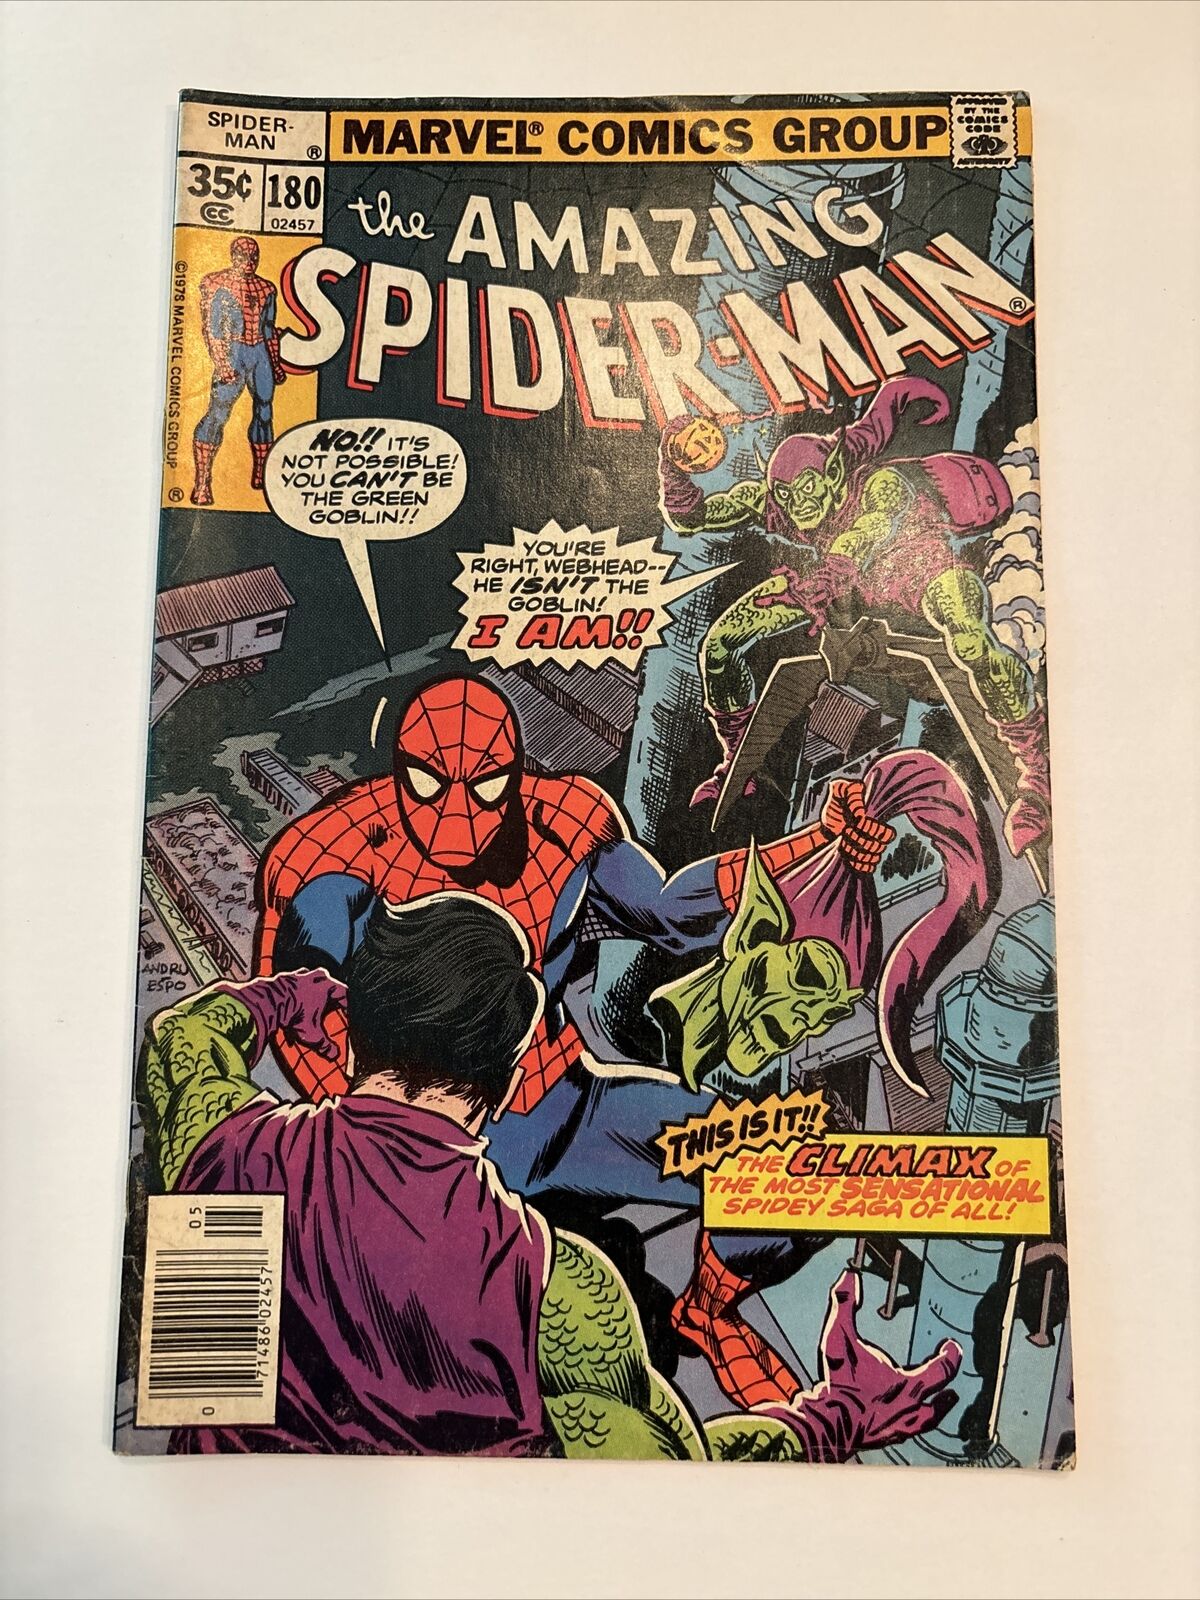 The amazing Spider-Man Comic 180